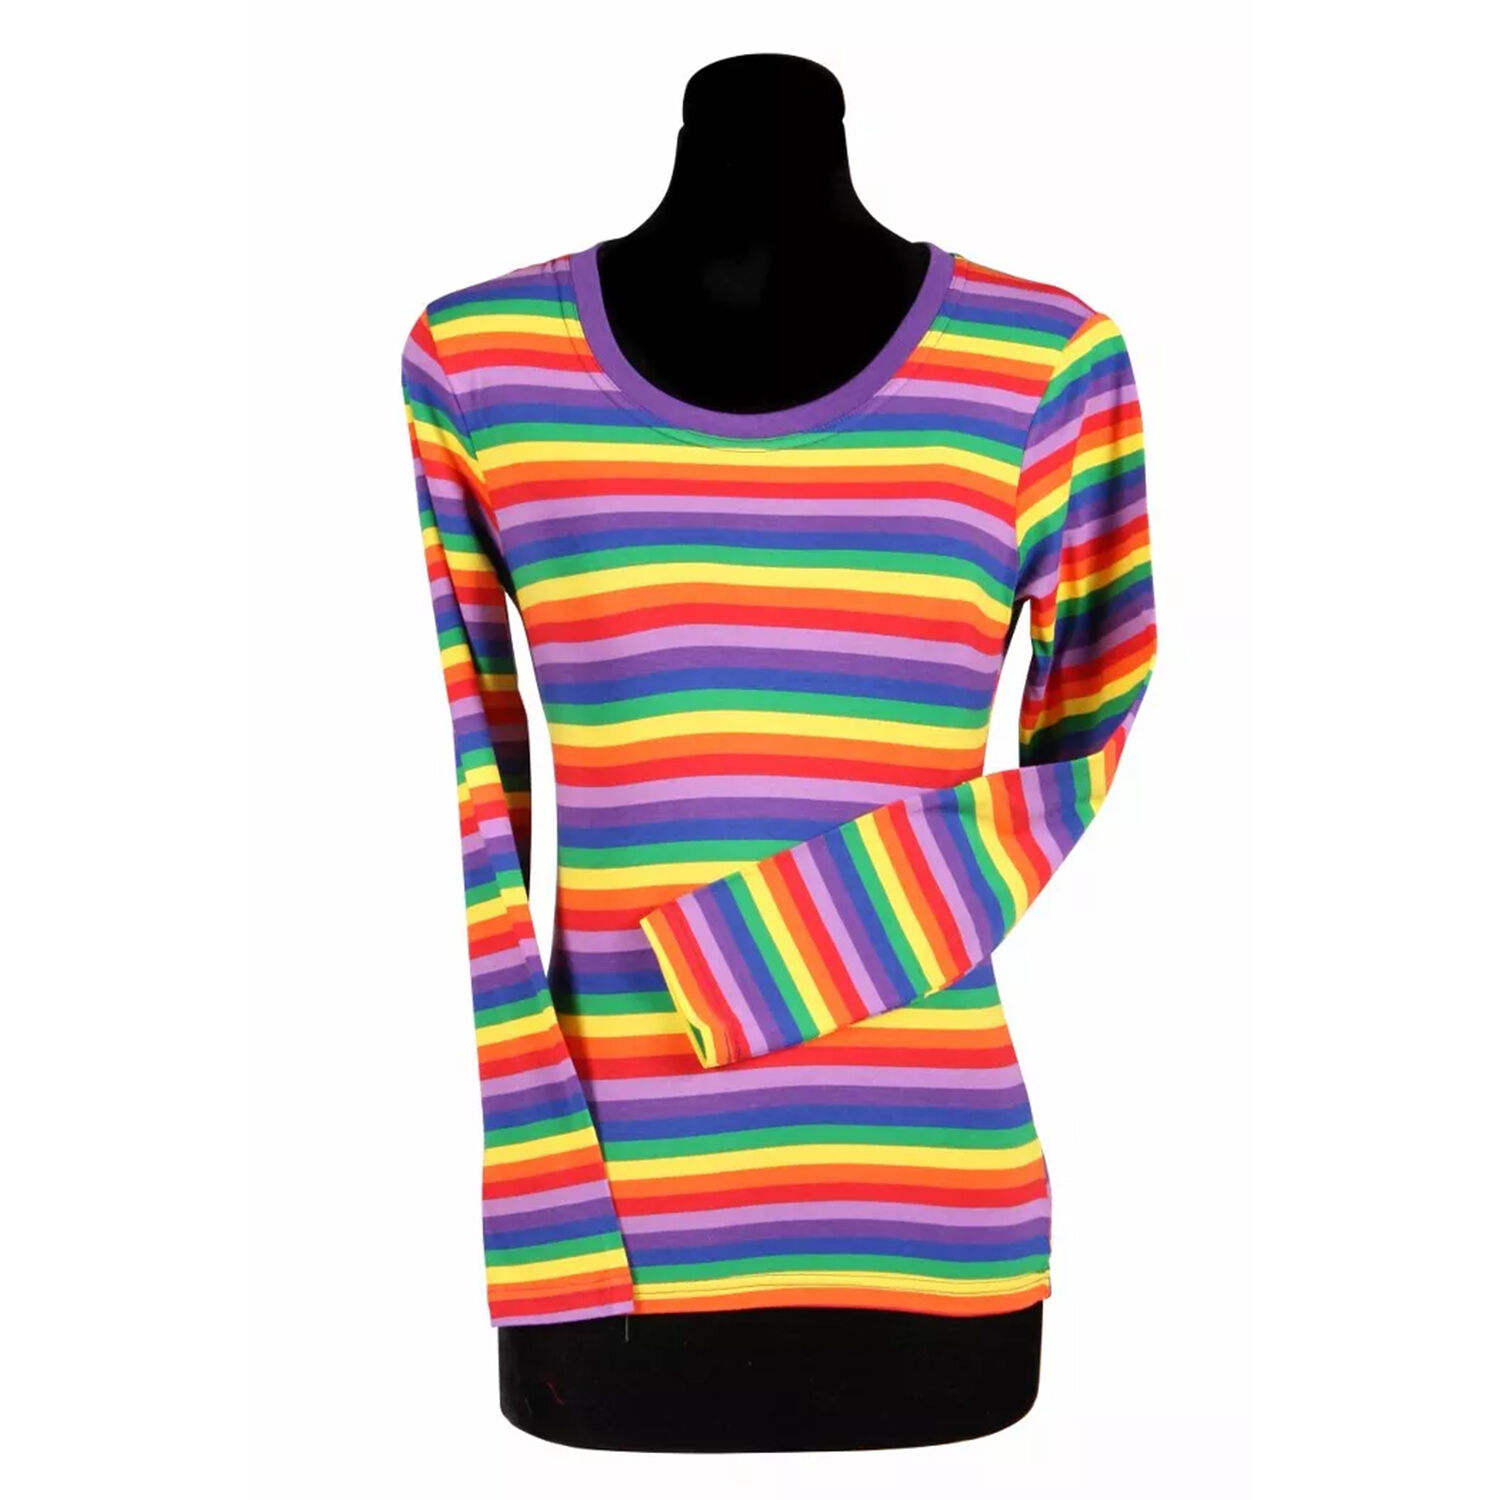 NEU Damen-Kostüm Ringelshirt langarm, regenbogenfarben, bunt, Größe: XS